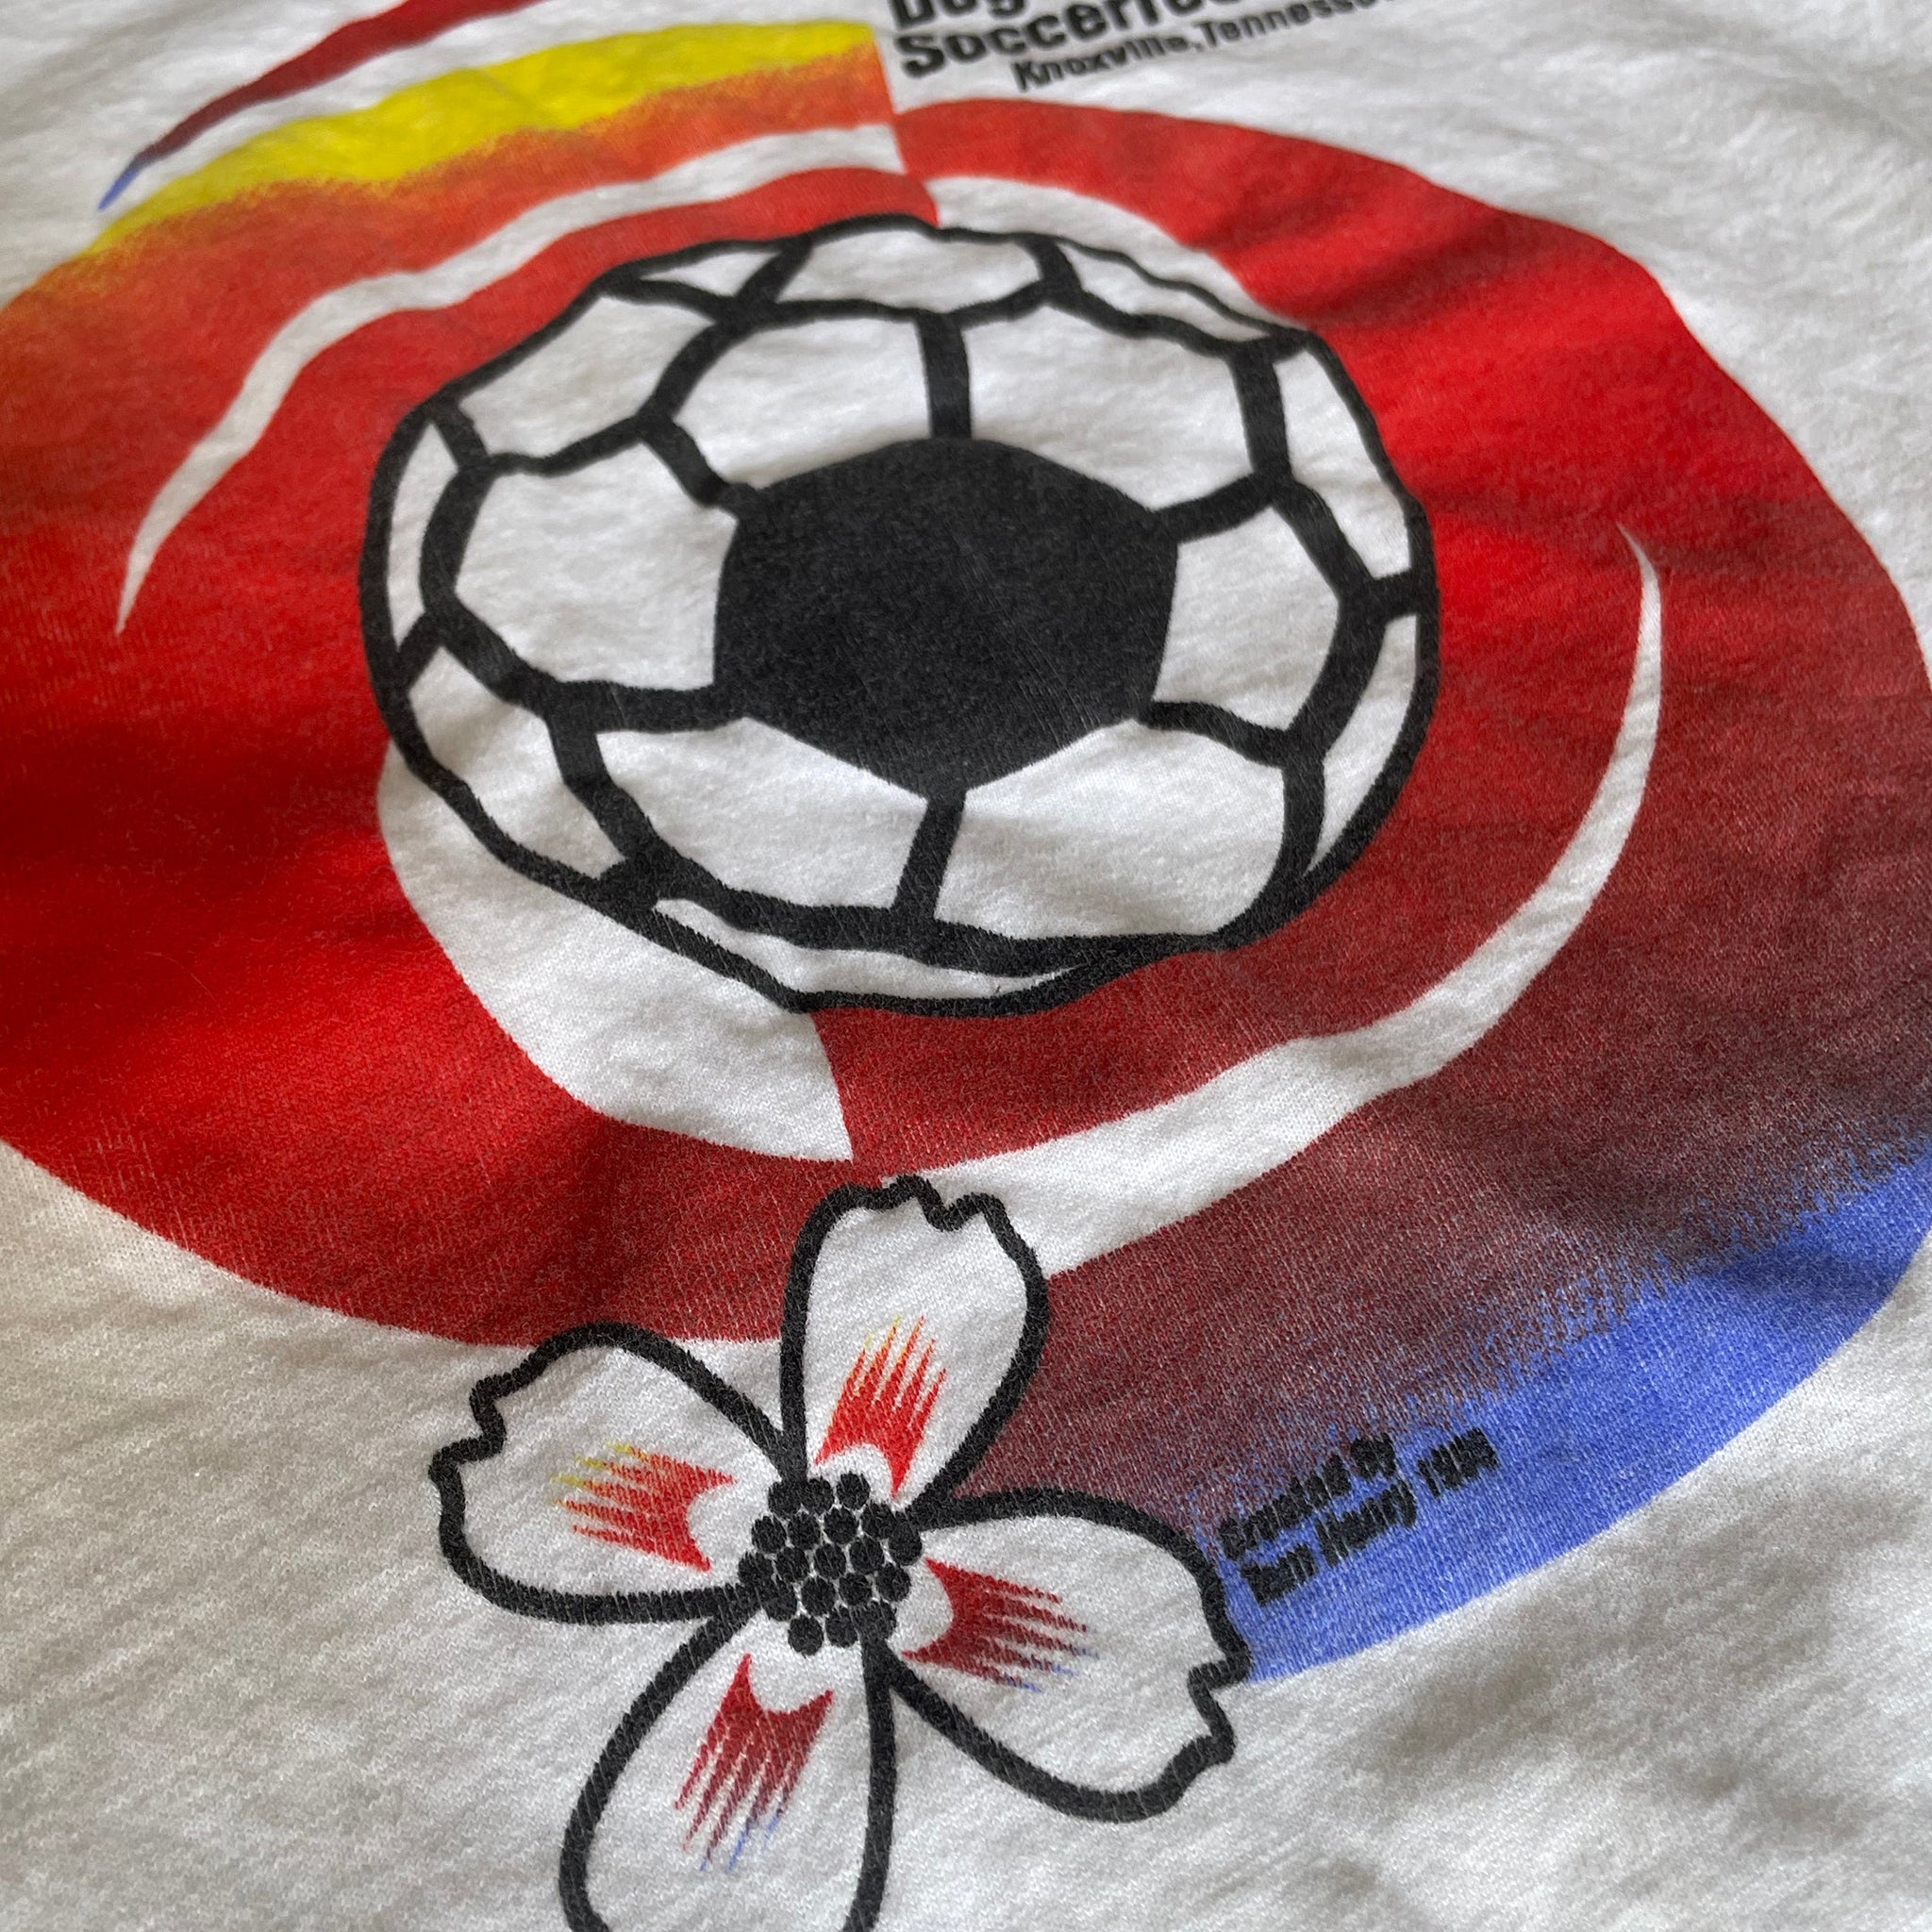 1995 Dogwood Arts Soccerfest T-Shirt - XL